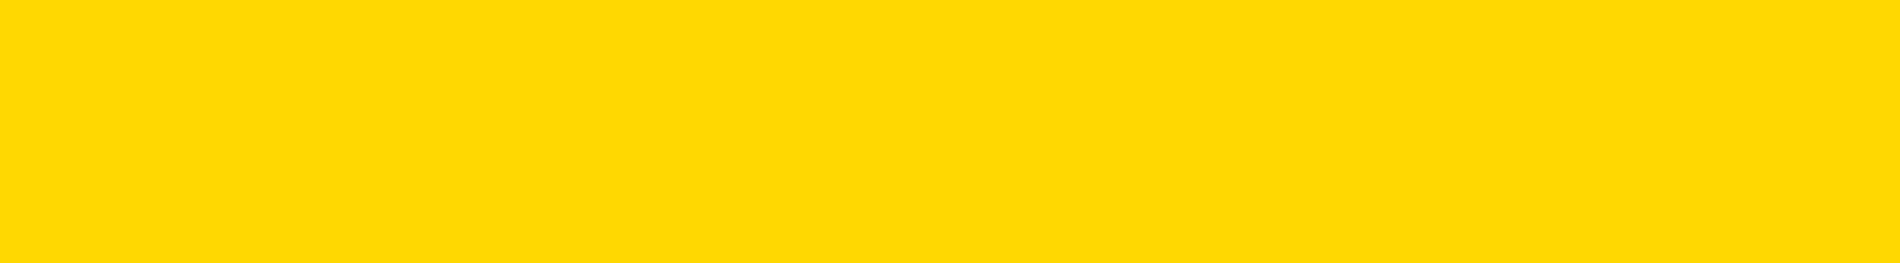 Yellow Background.